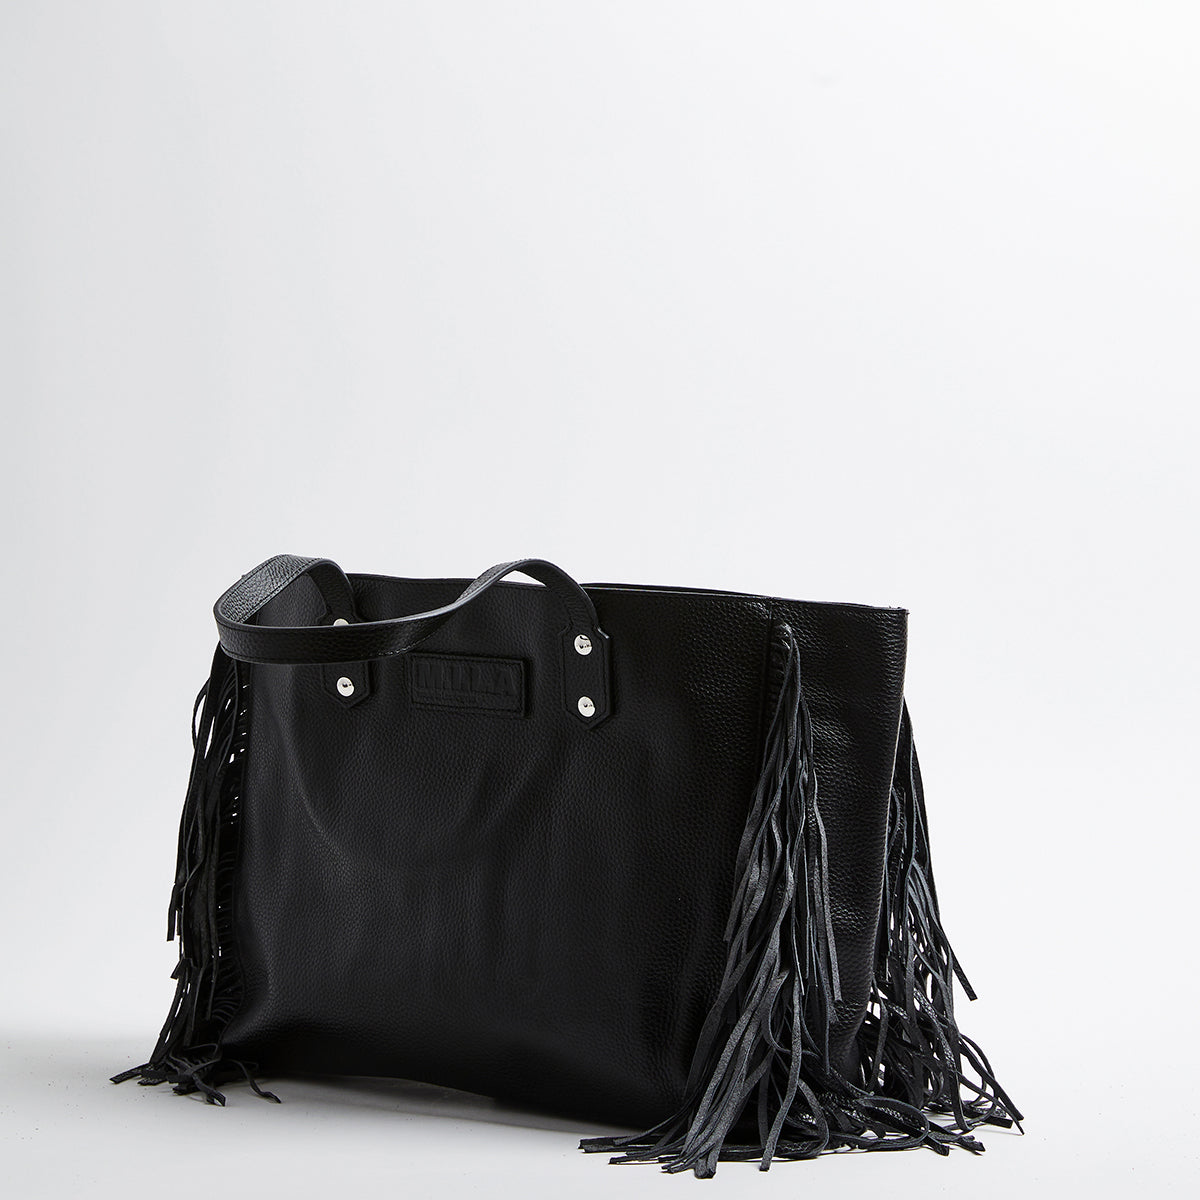 Cher Bag | Luxury Leather | Black